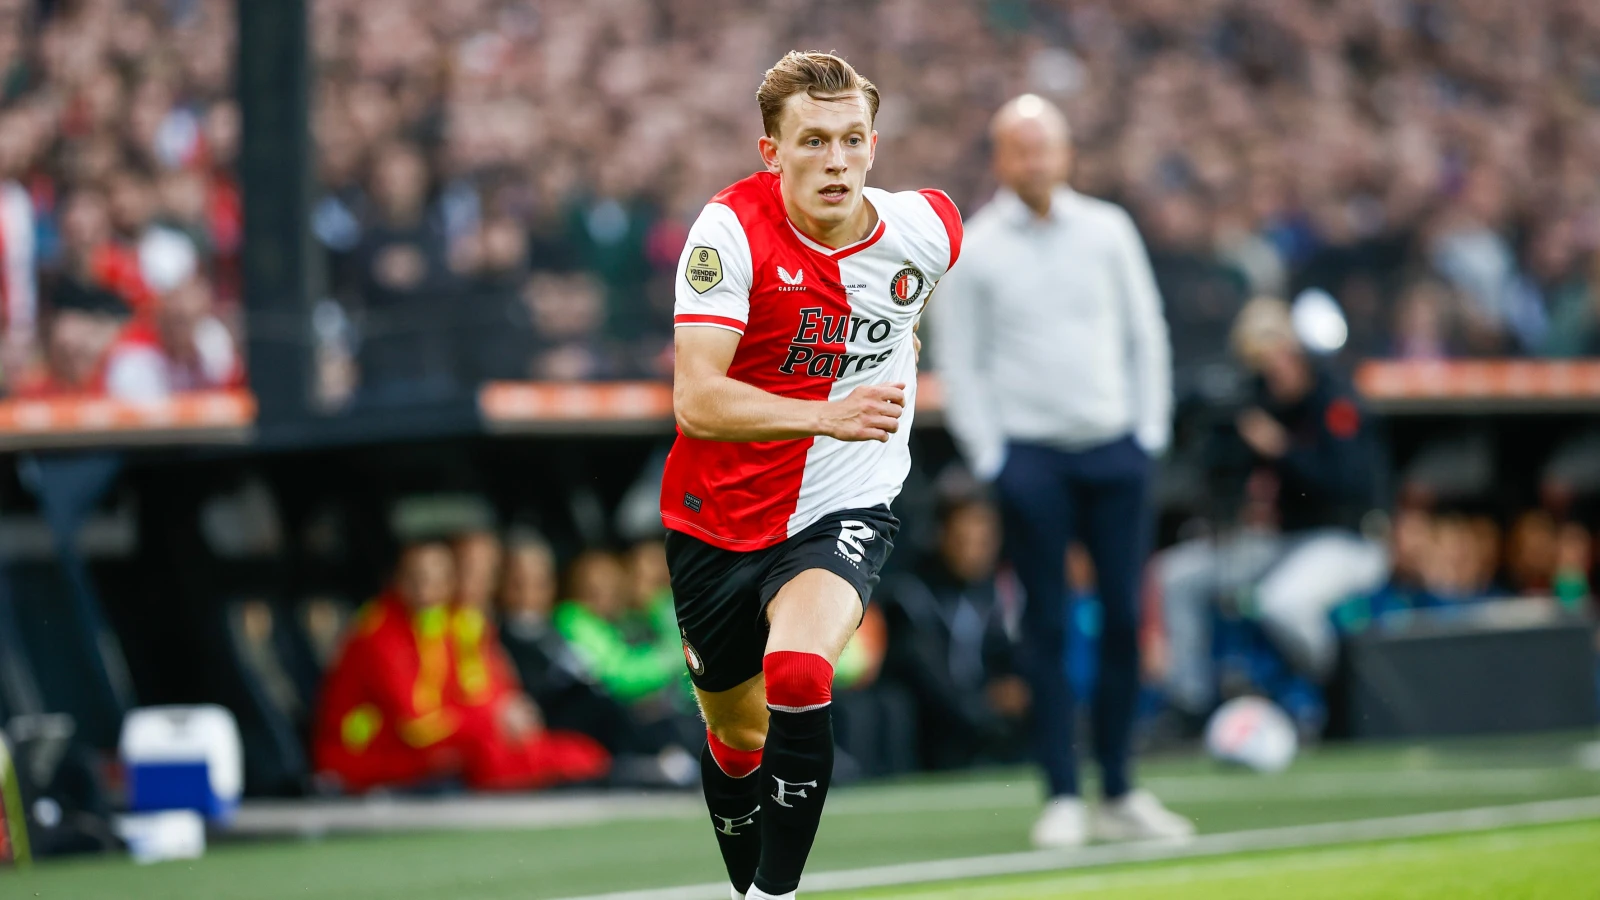 OFFICIEEL | Feyenoord en US Sassuolo akkoord over transfer Pedersen'